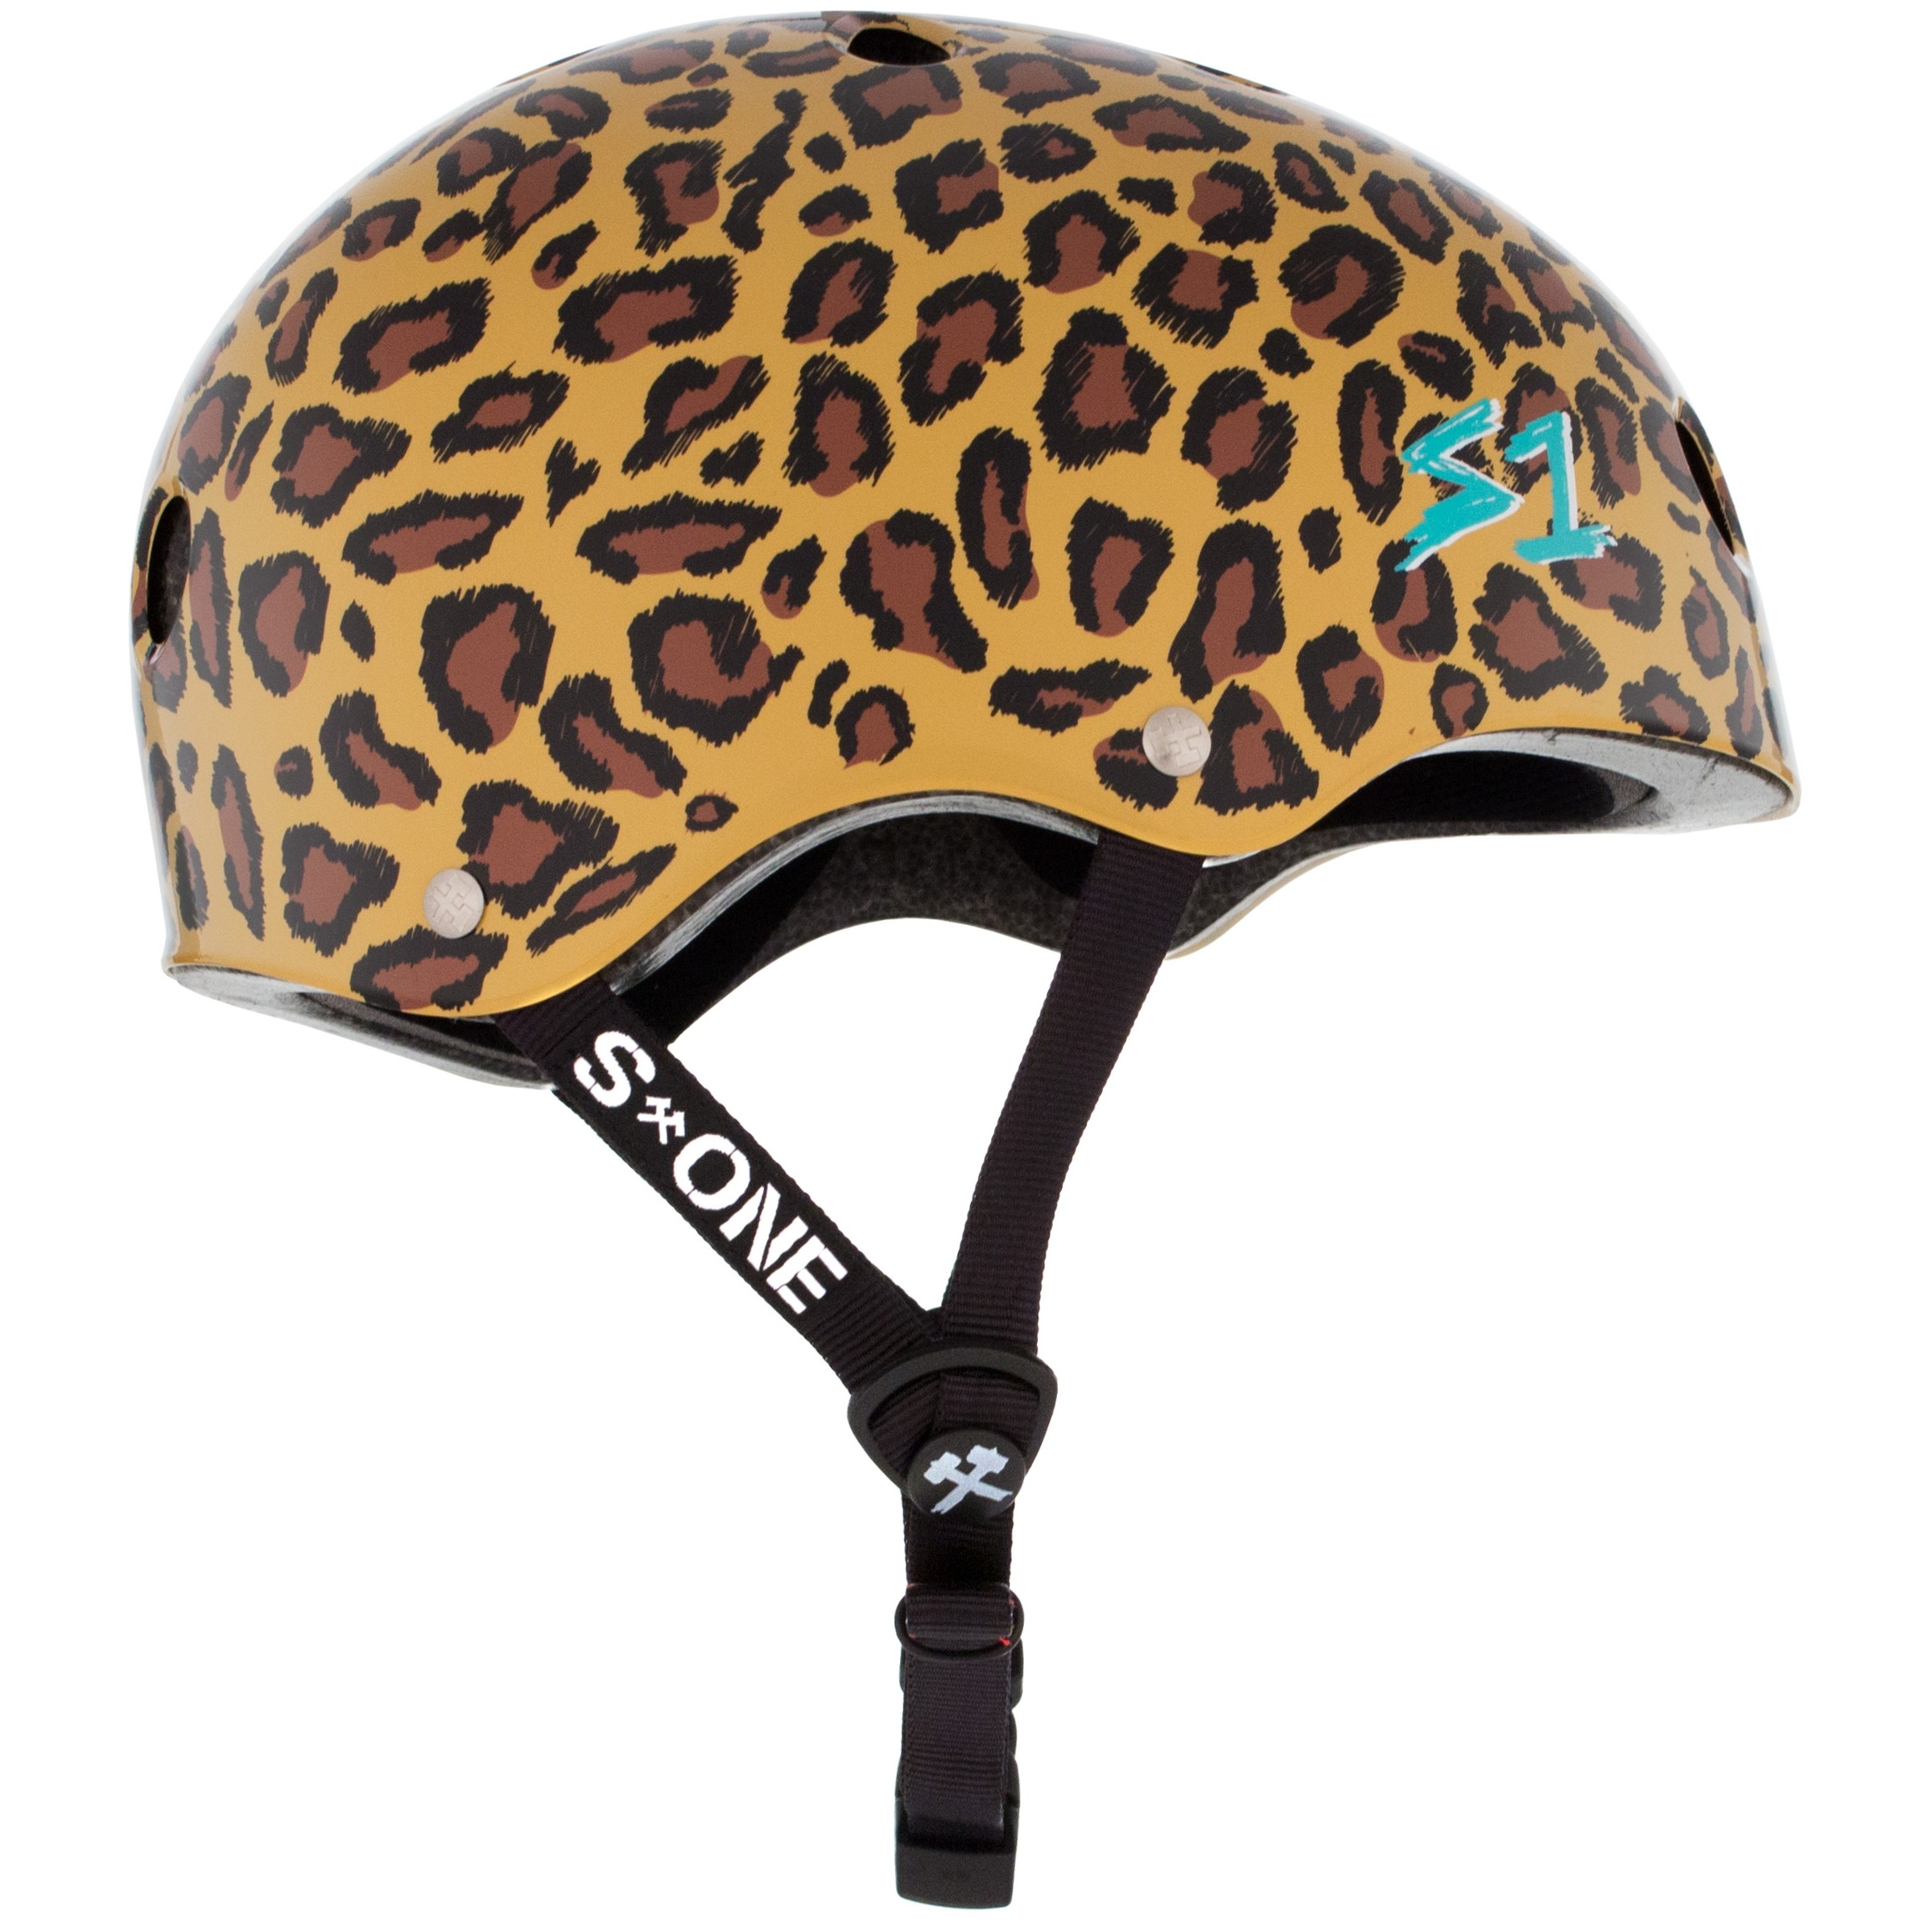 S1 Moxi Lifer Helmet Moxi Leopard Print 